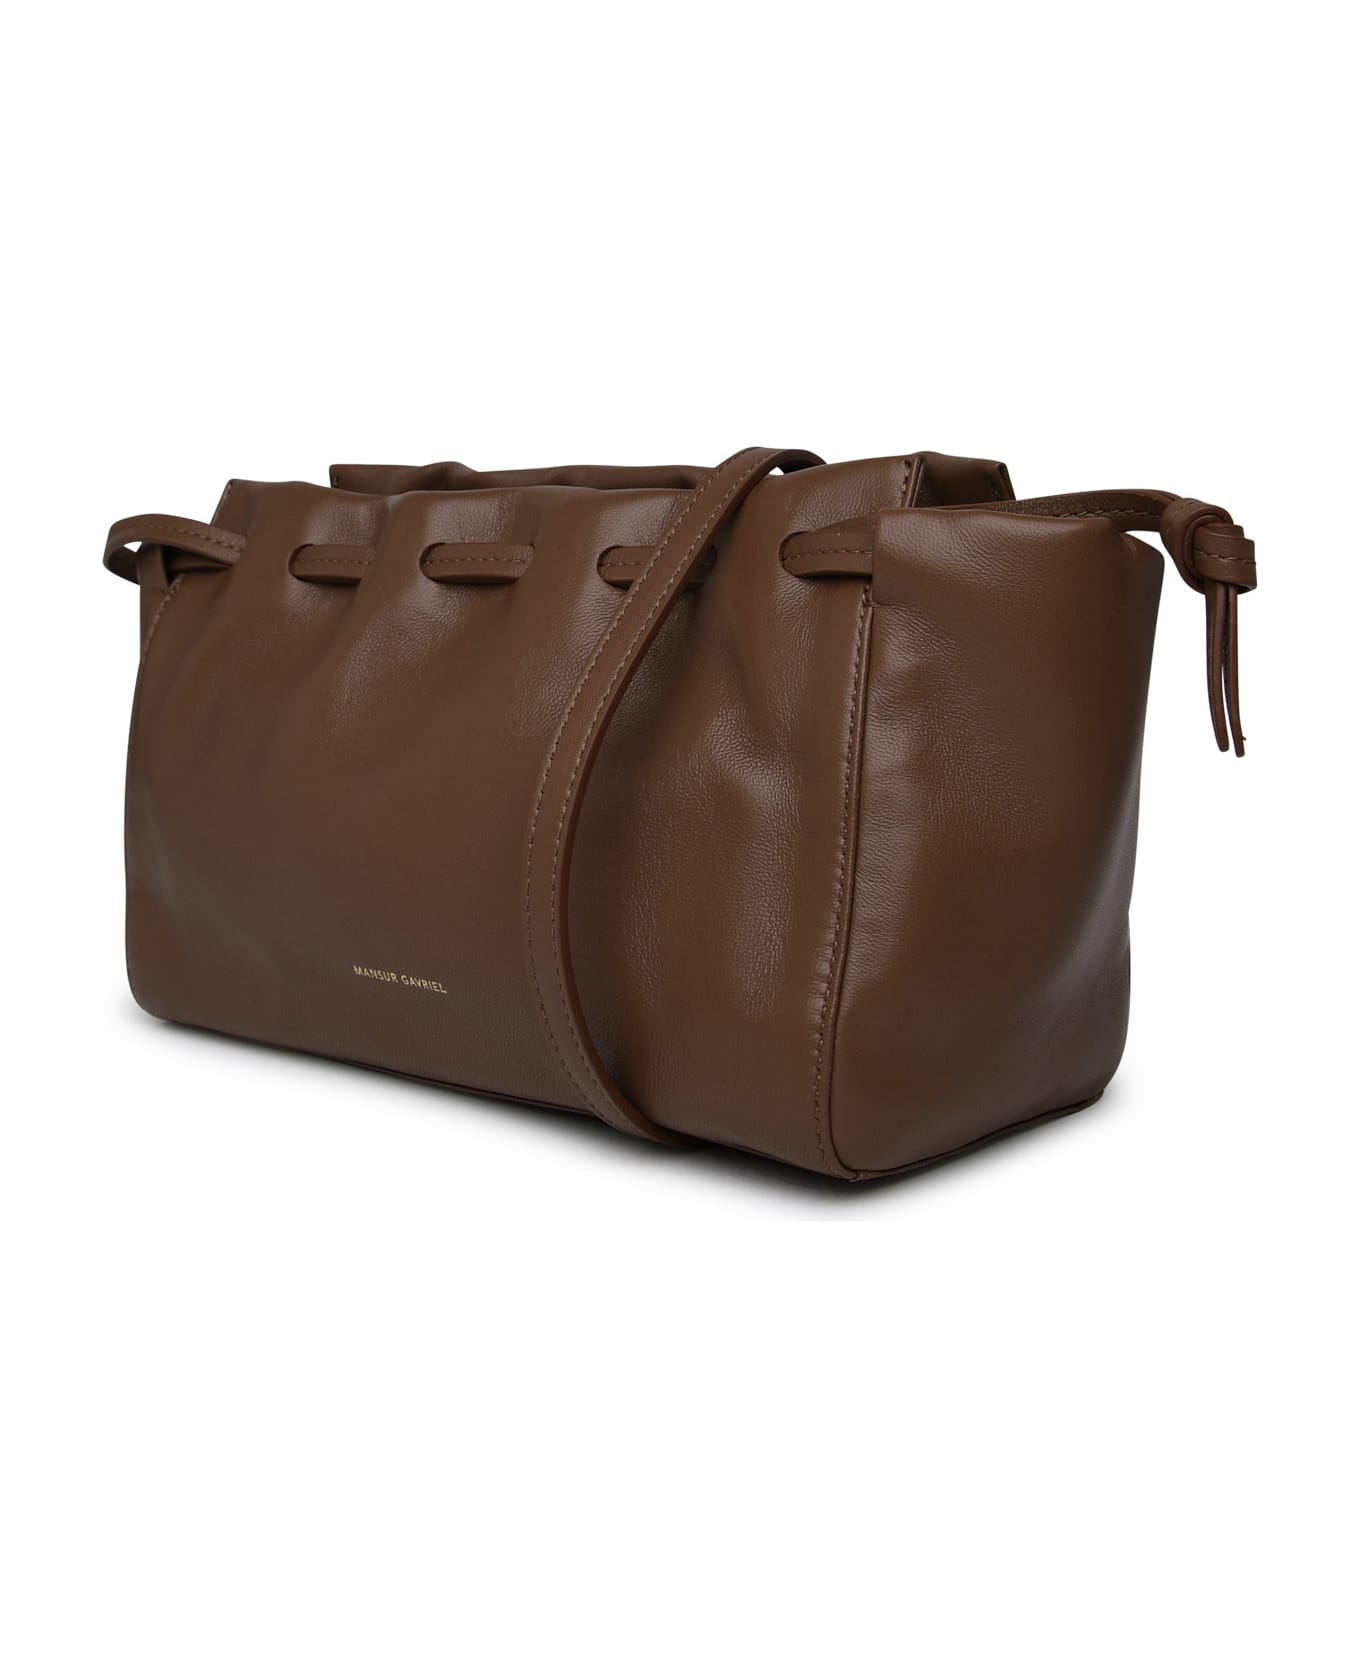 Mansur Gavriel 'bloom' Small Brown Leather Crossbody Bag - Brown